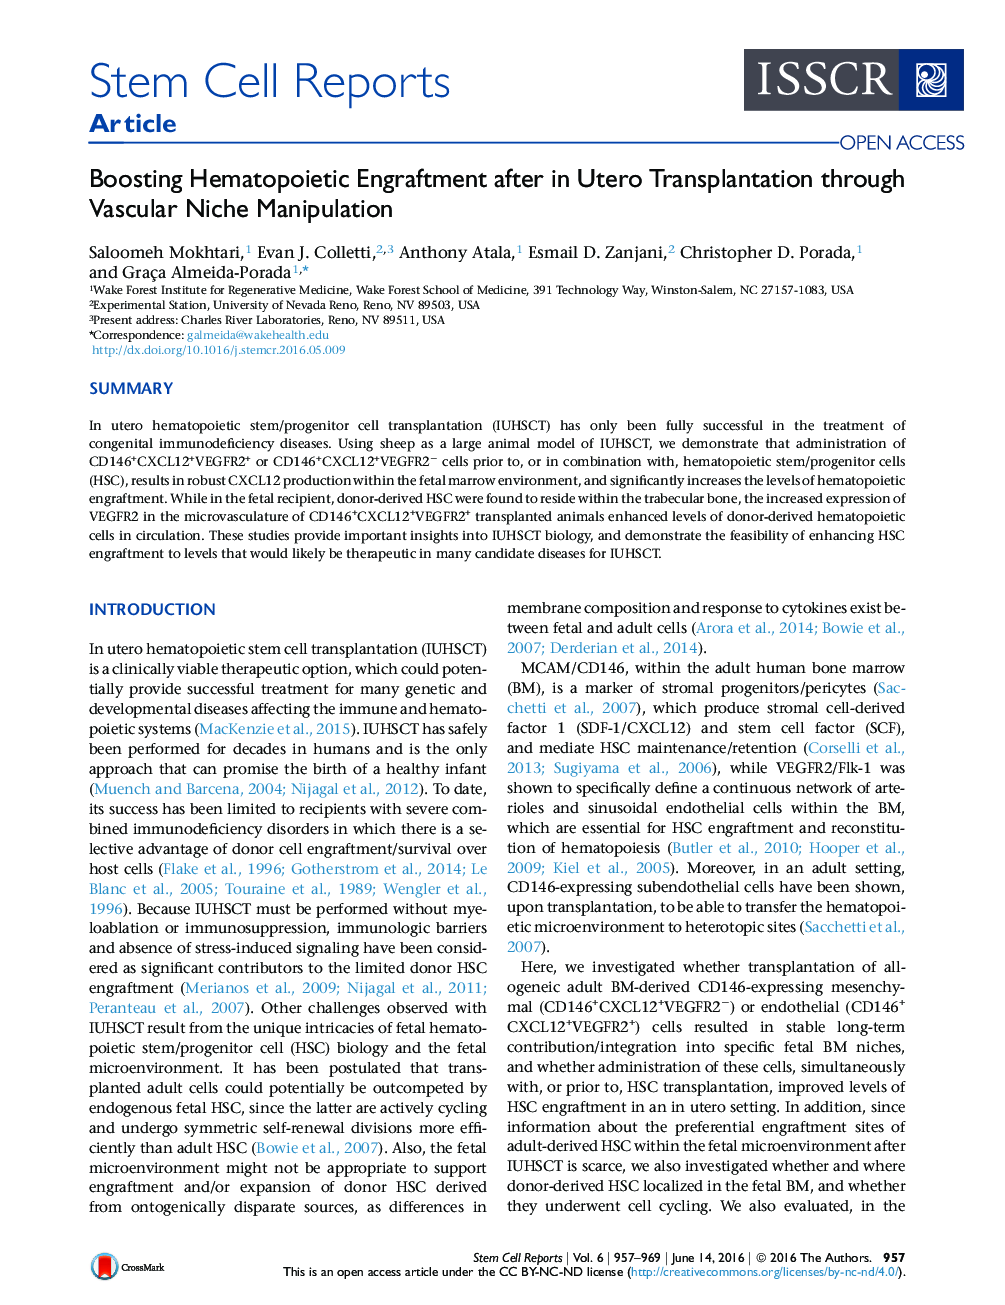 Boosting Hematopoietic Engraftment after in Utero Transplantation through Vascular Niche Manipulation